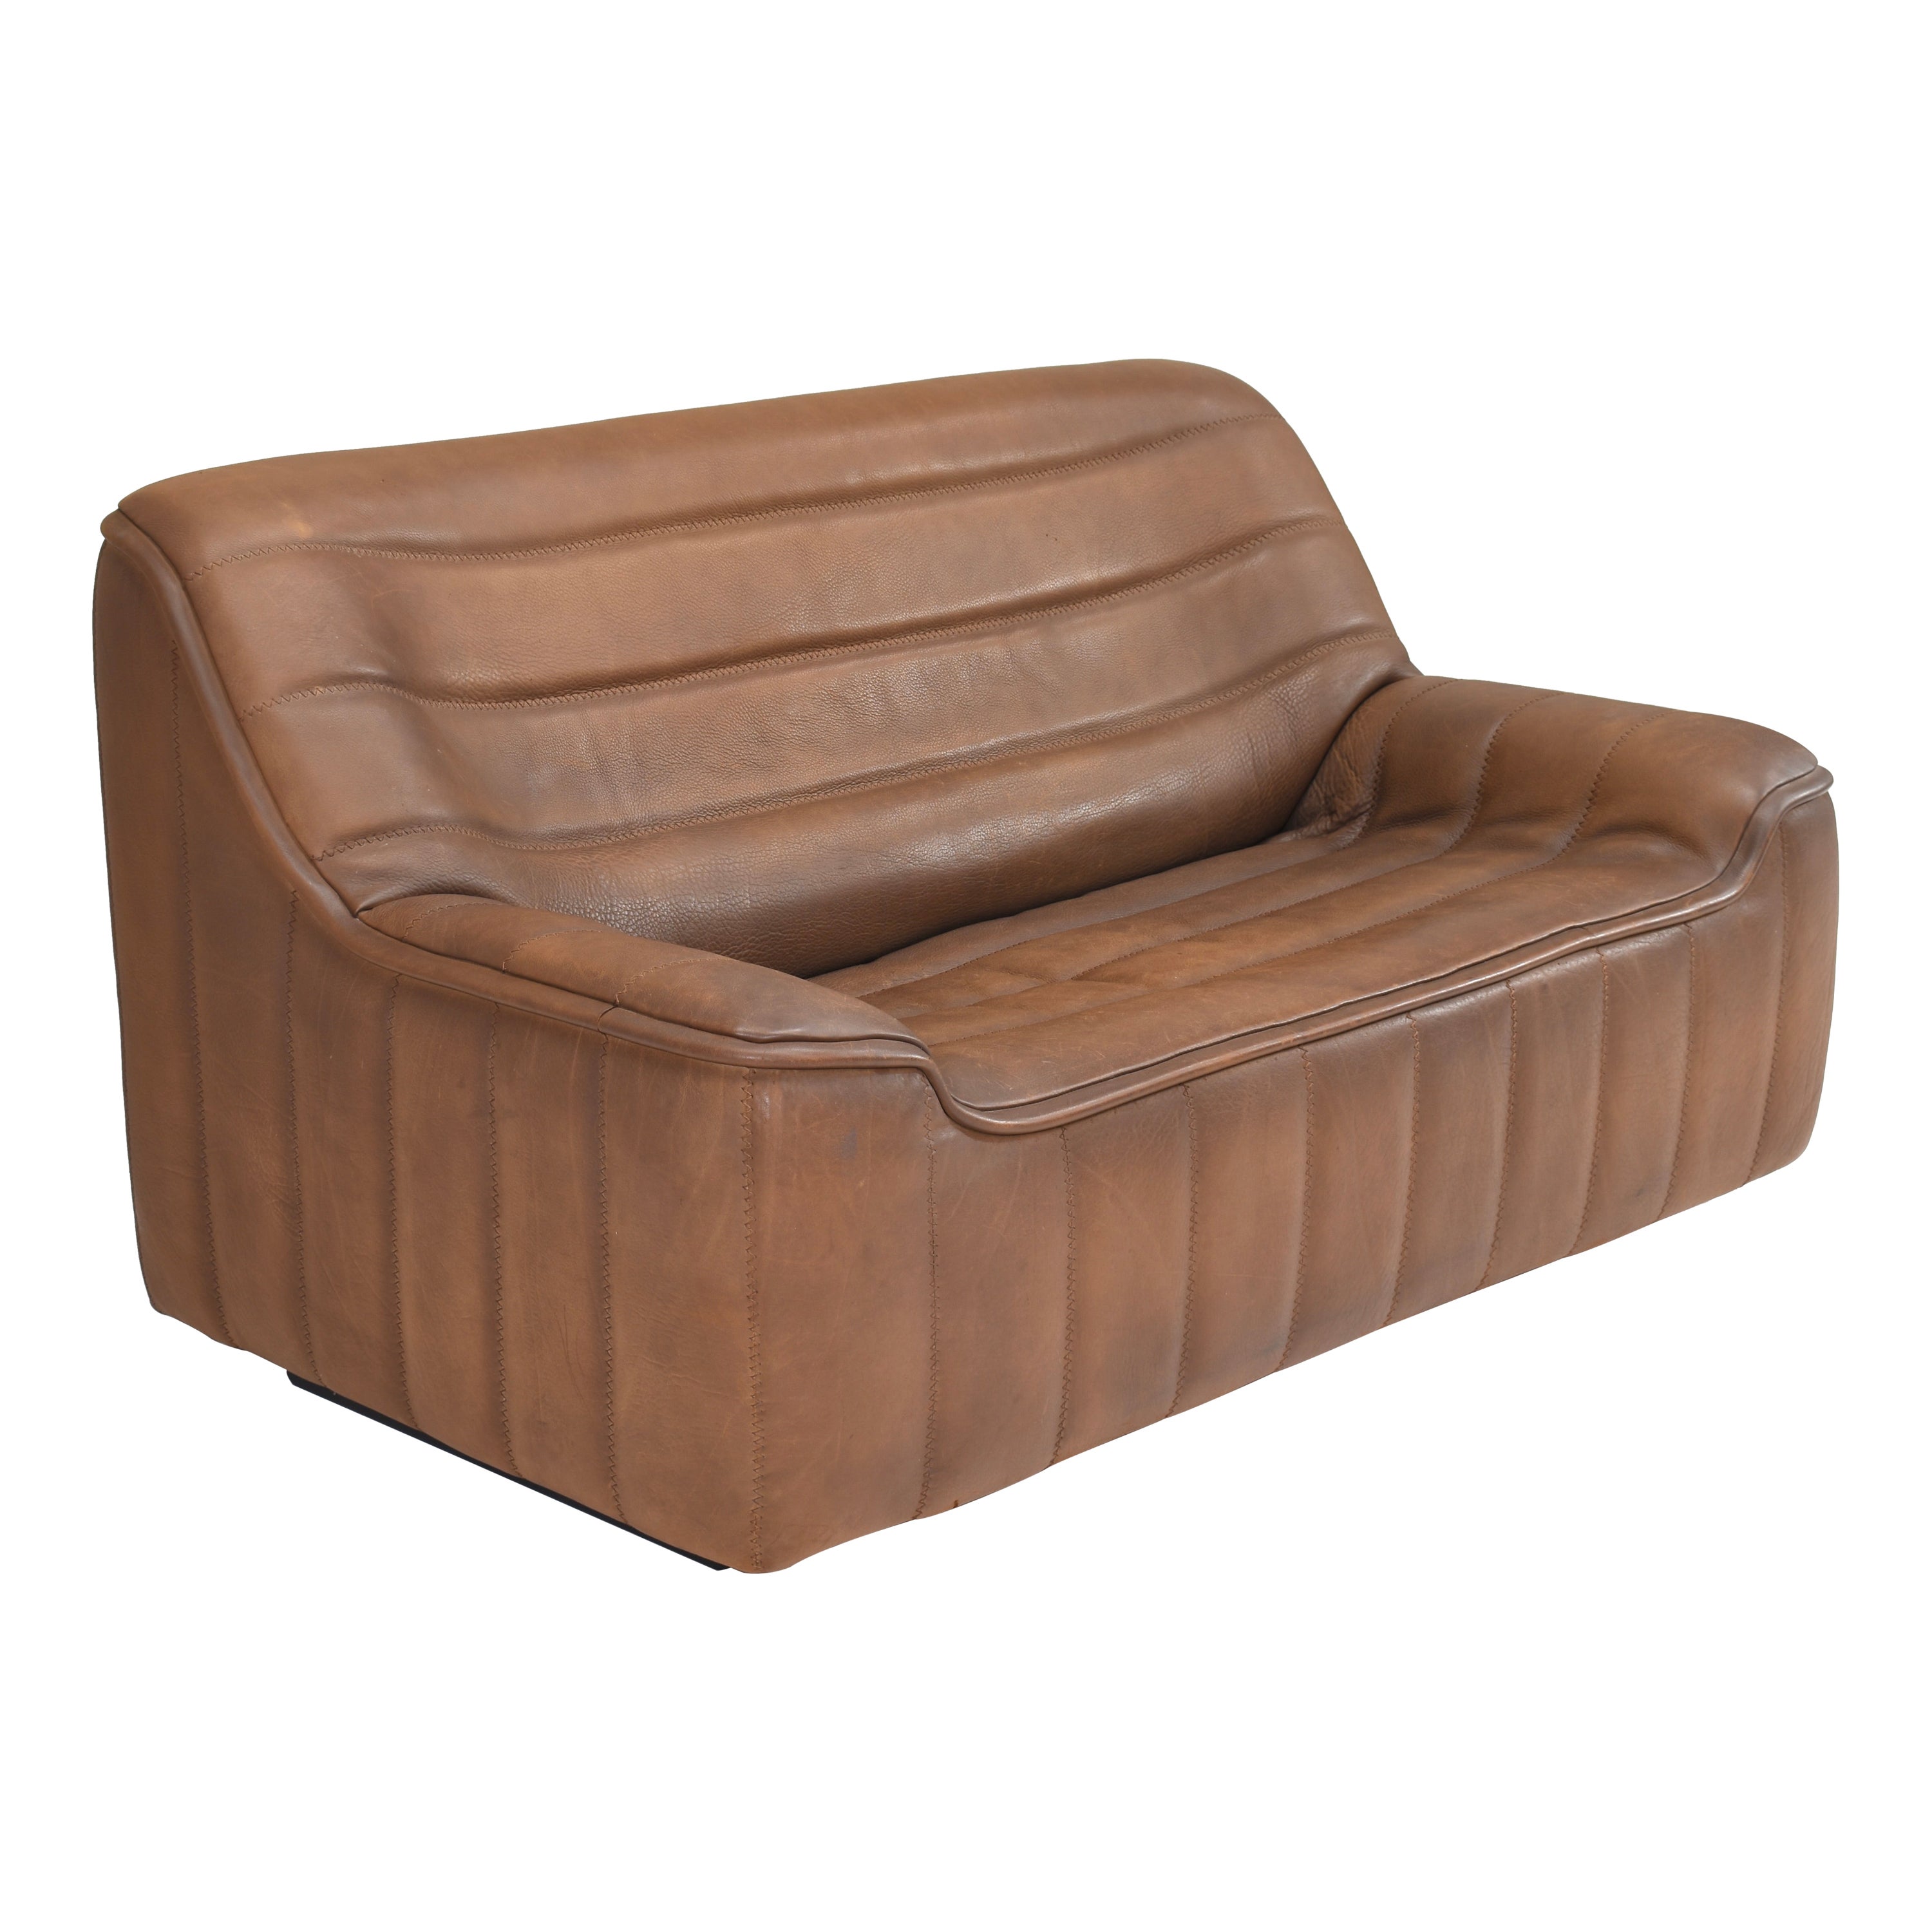 De Sede DS-84 two seat sofa in Tan Buffalo leather – Switzerland, circa 1970